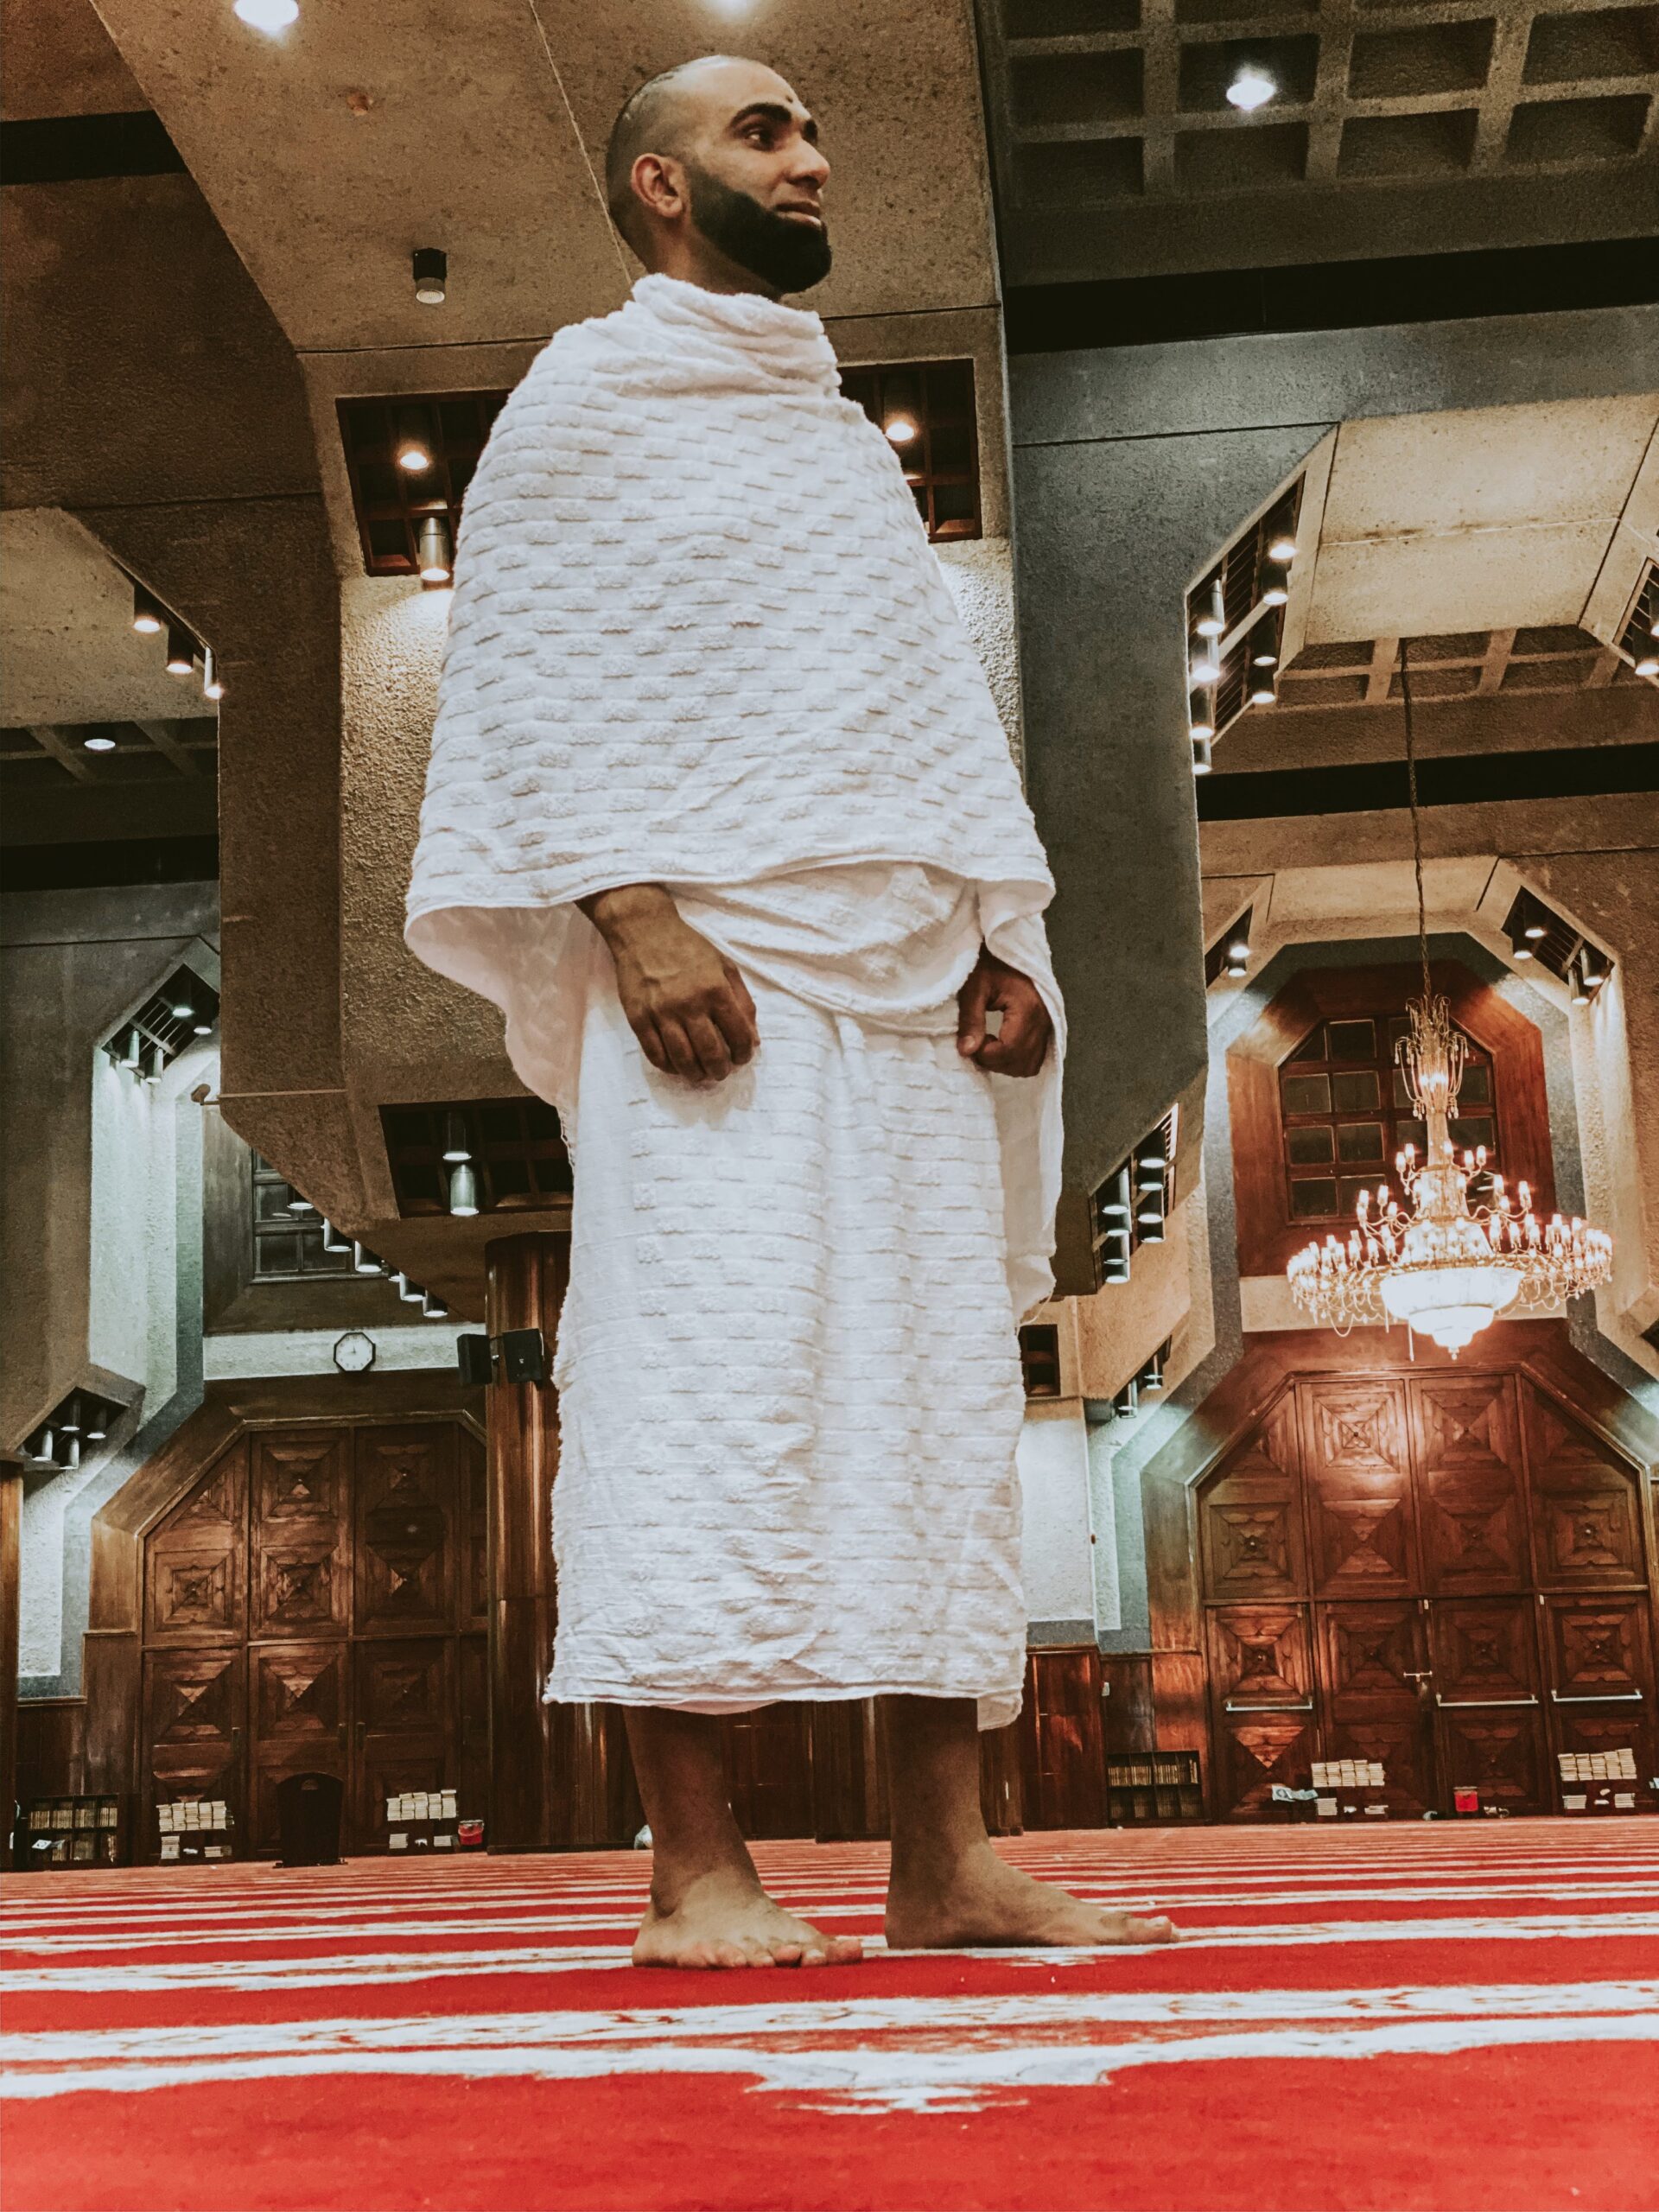 Muslim man praying at a mosque in saudi arabia